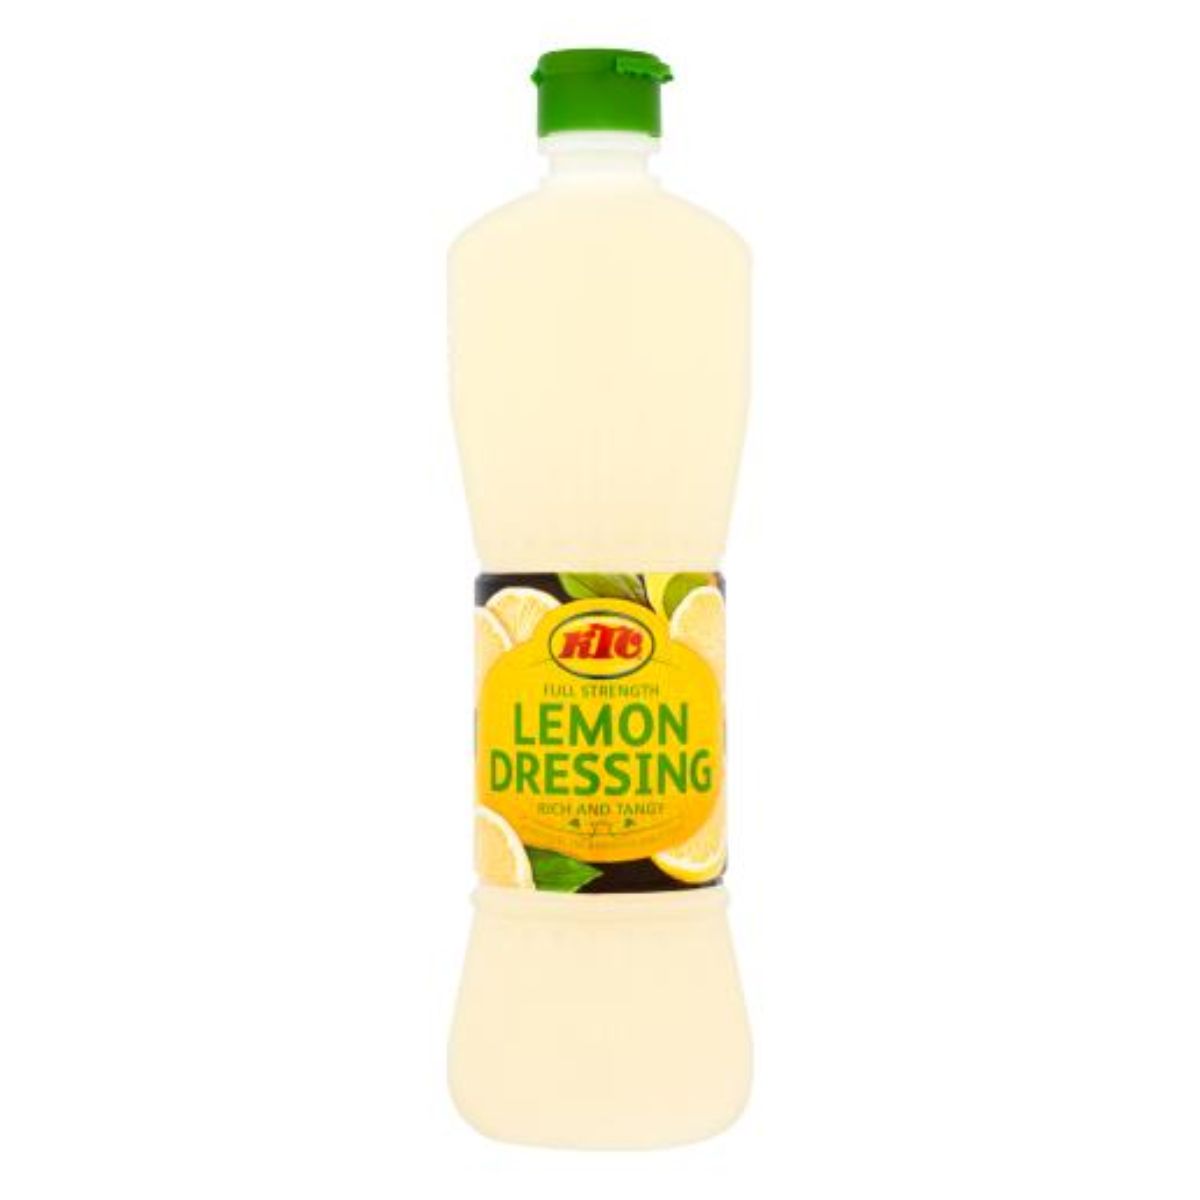 A bottle of KTC - Lemon Dressing - 400ml on a white background.